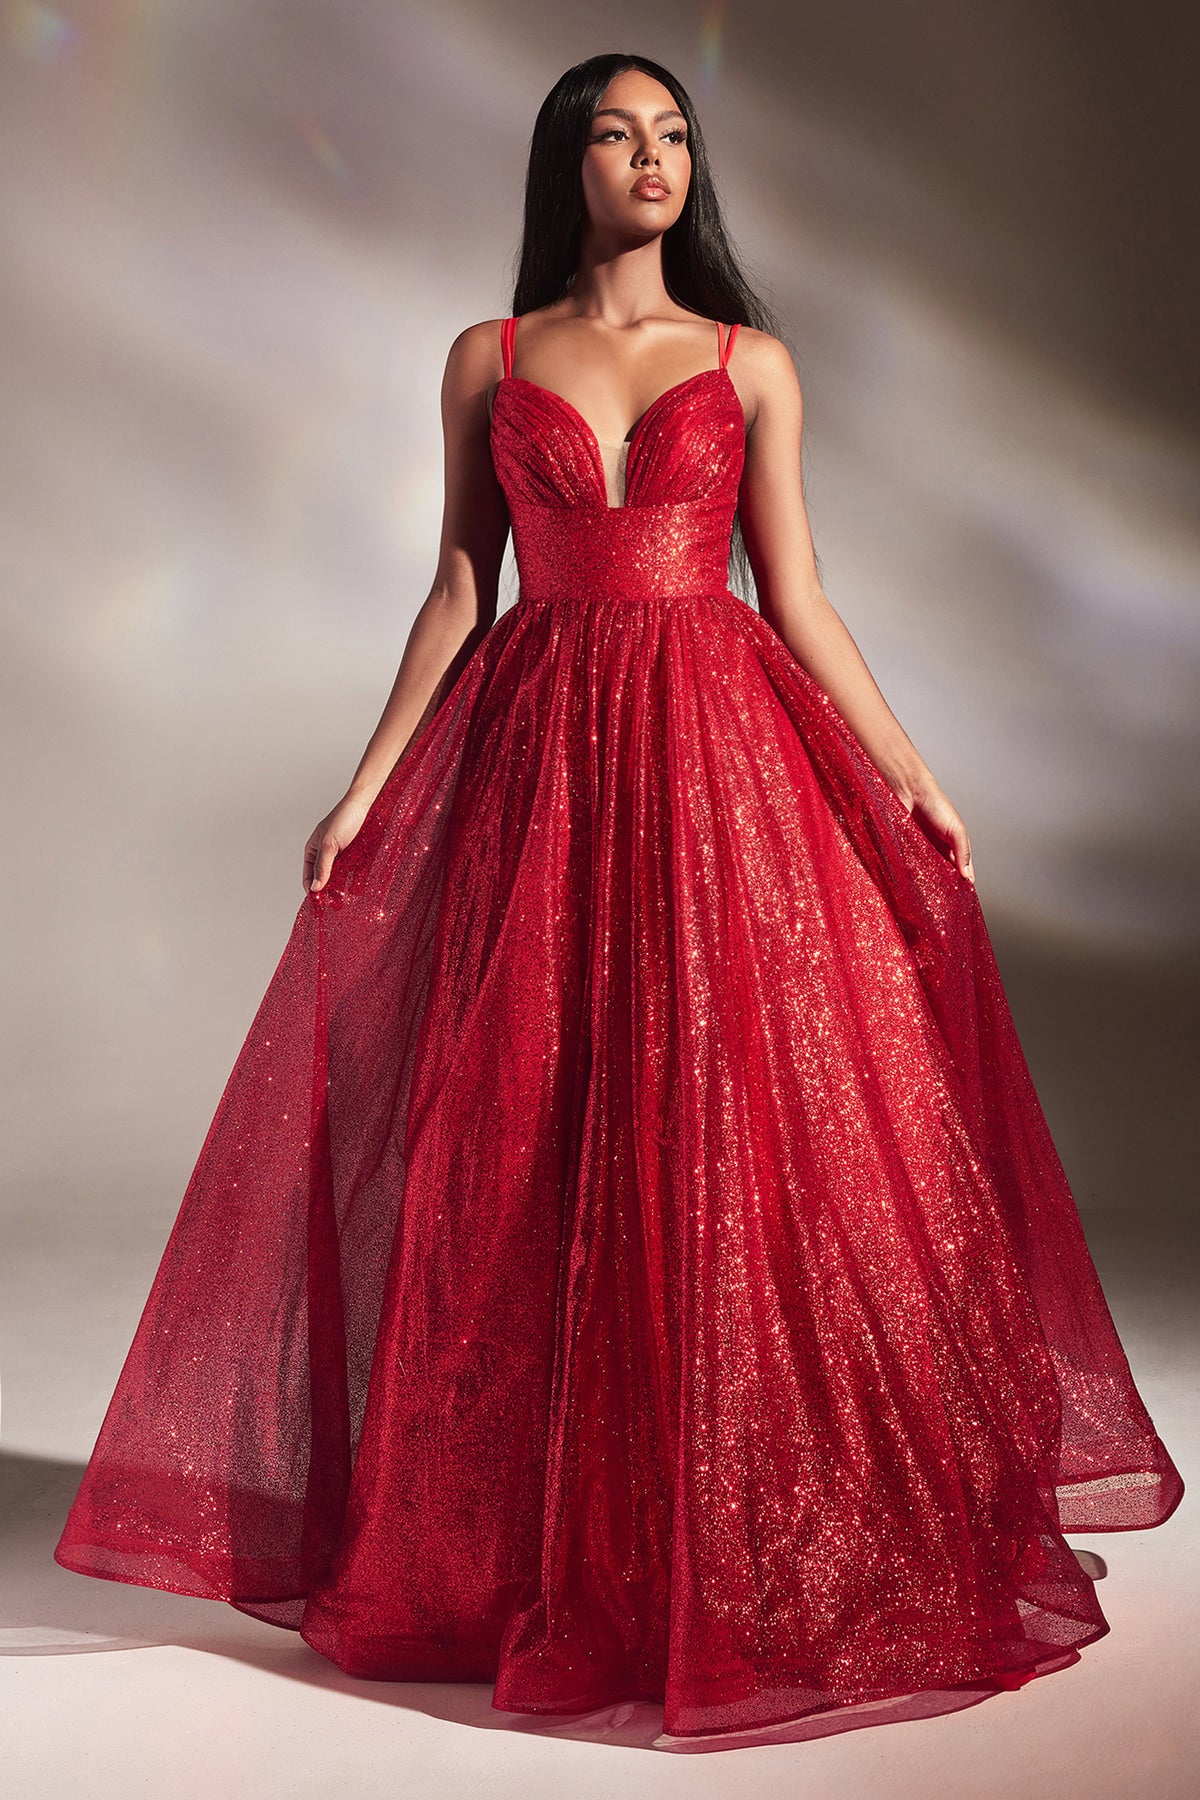 Cinderella Dress Red Sequin – Indy_c